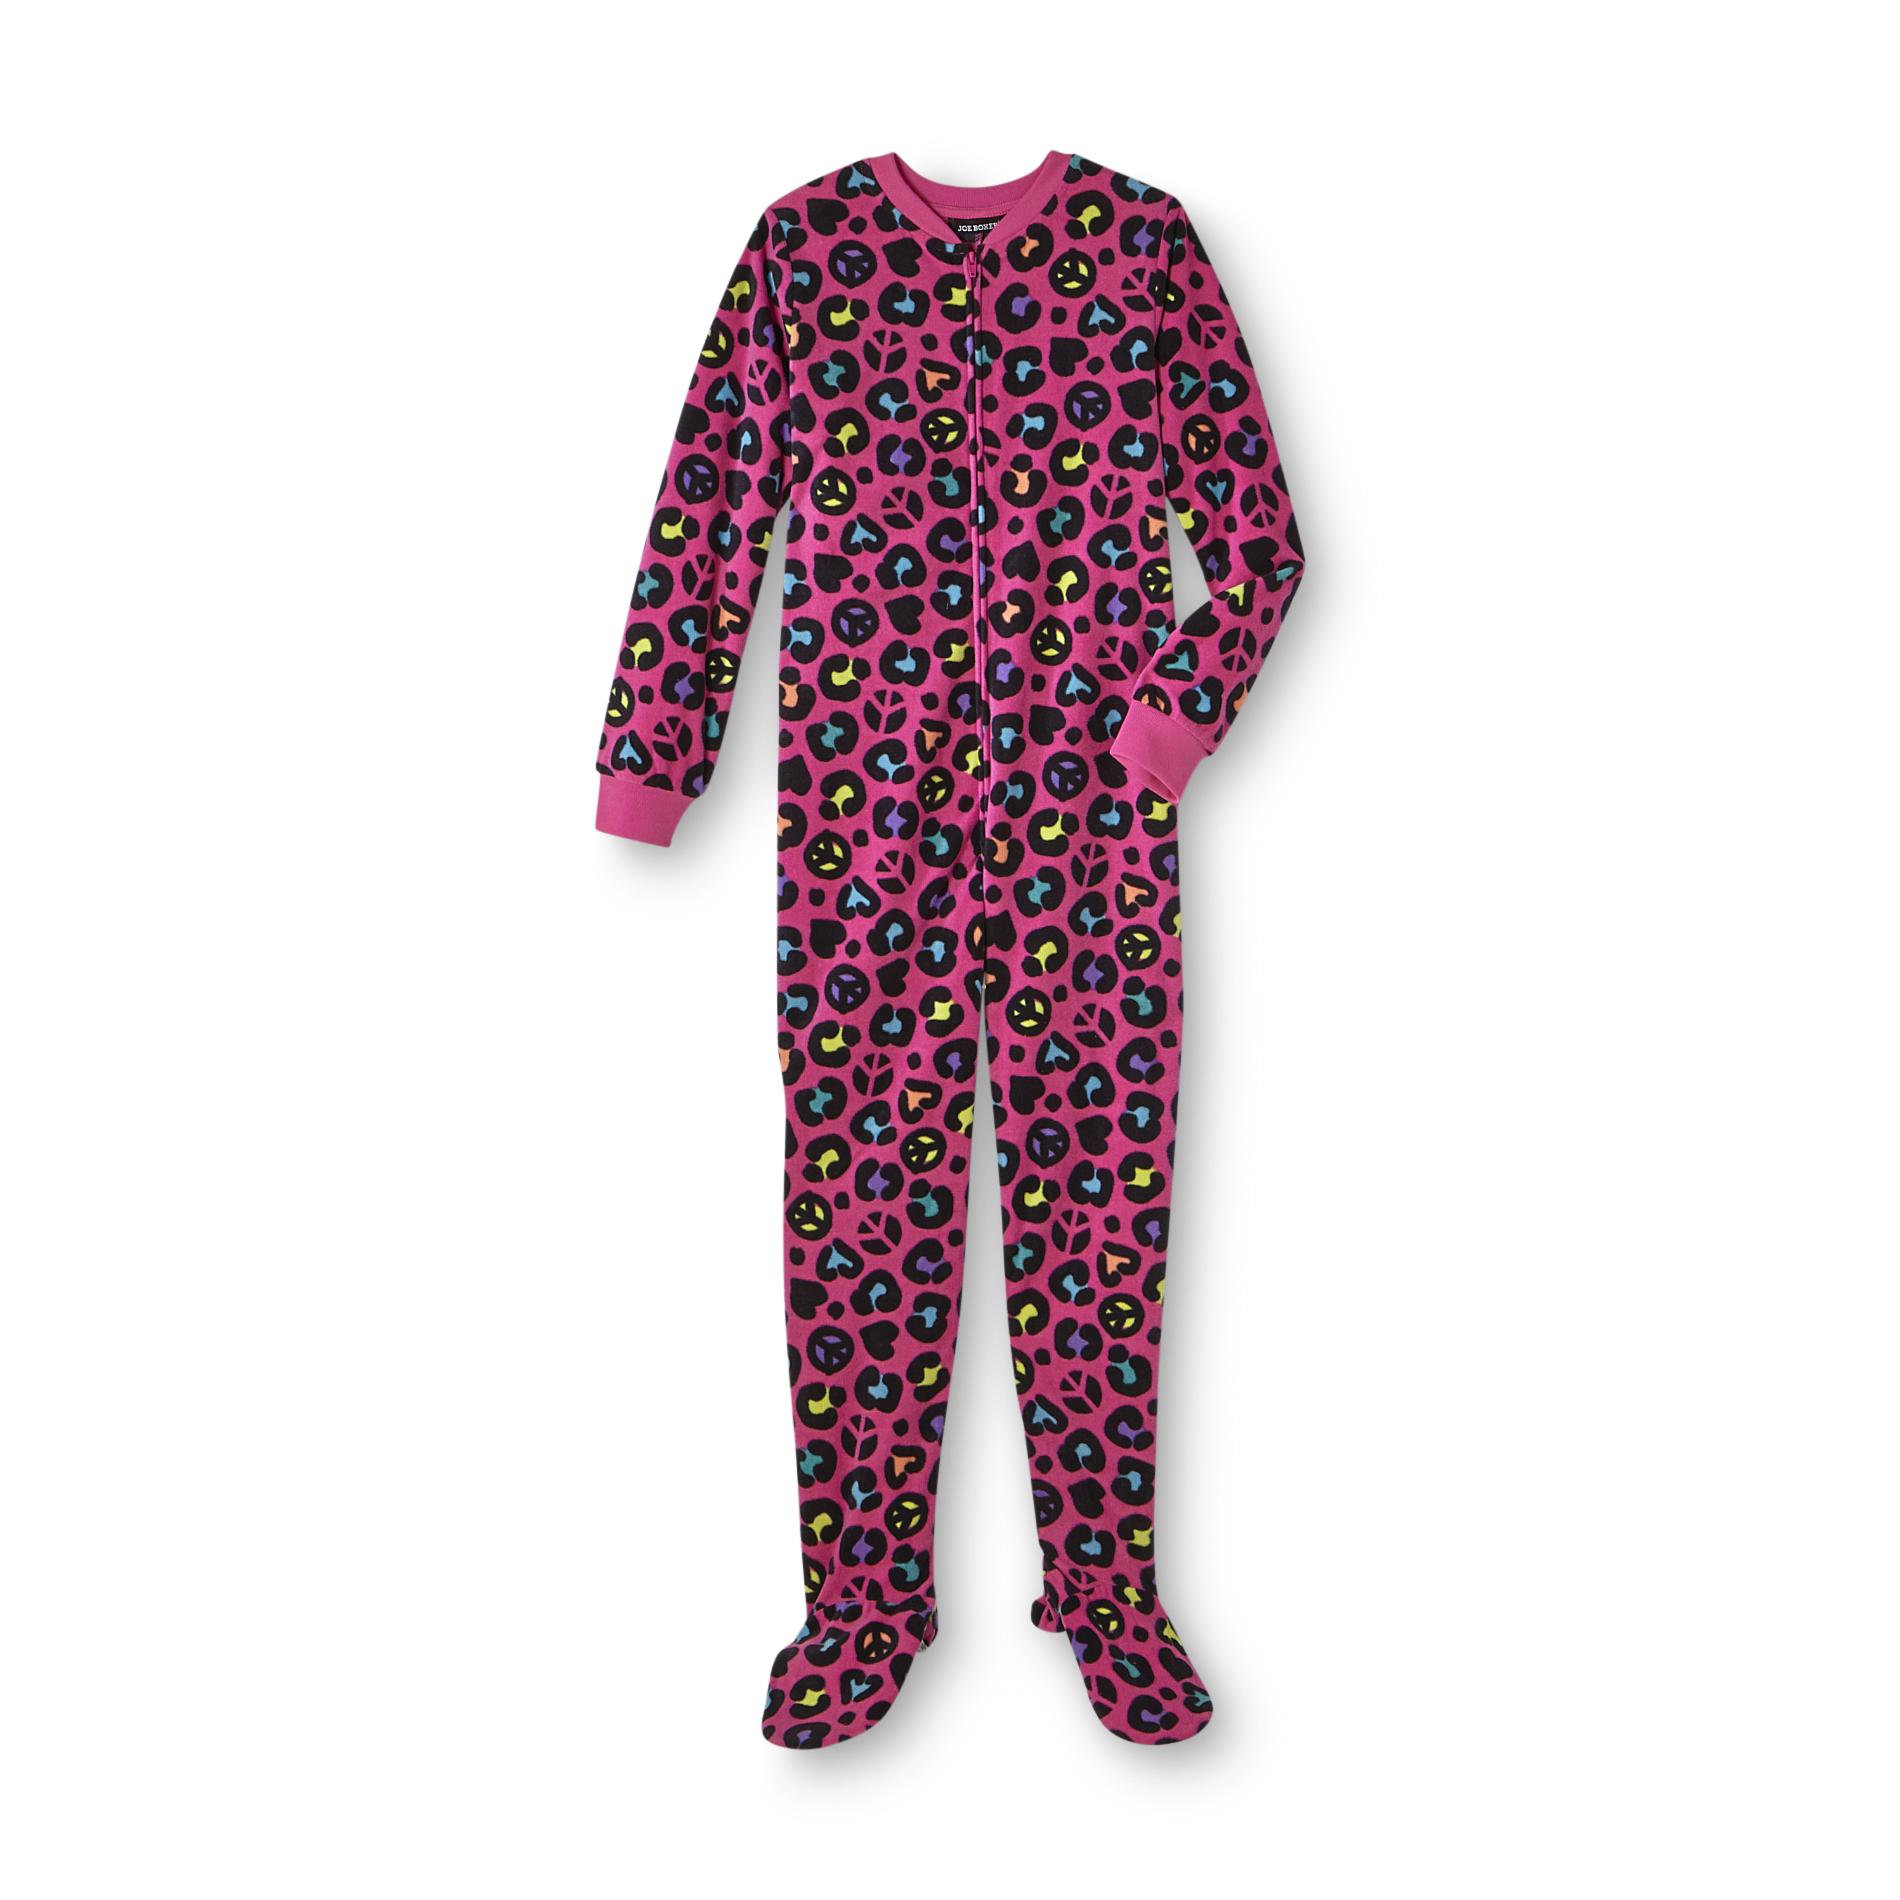 Joe Boxer Girl's Plush Footed Pajamas - Leopard Print